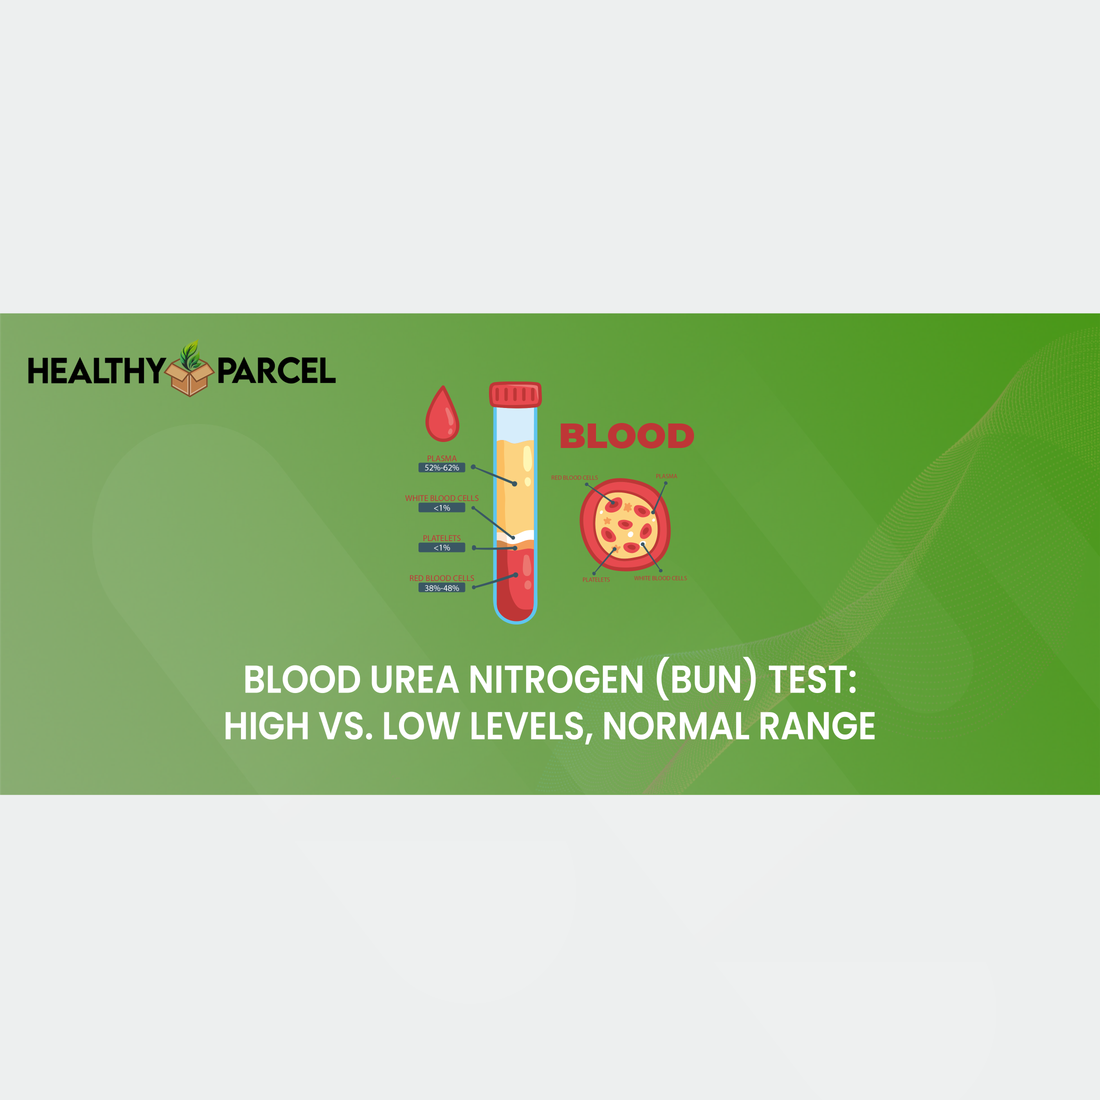 Blood Urea Nitrogen (BUN) Test: High vs. Low Levels, Normal Range